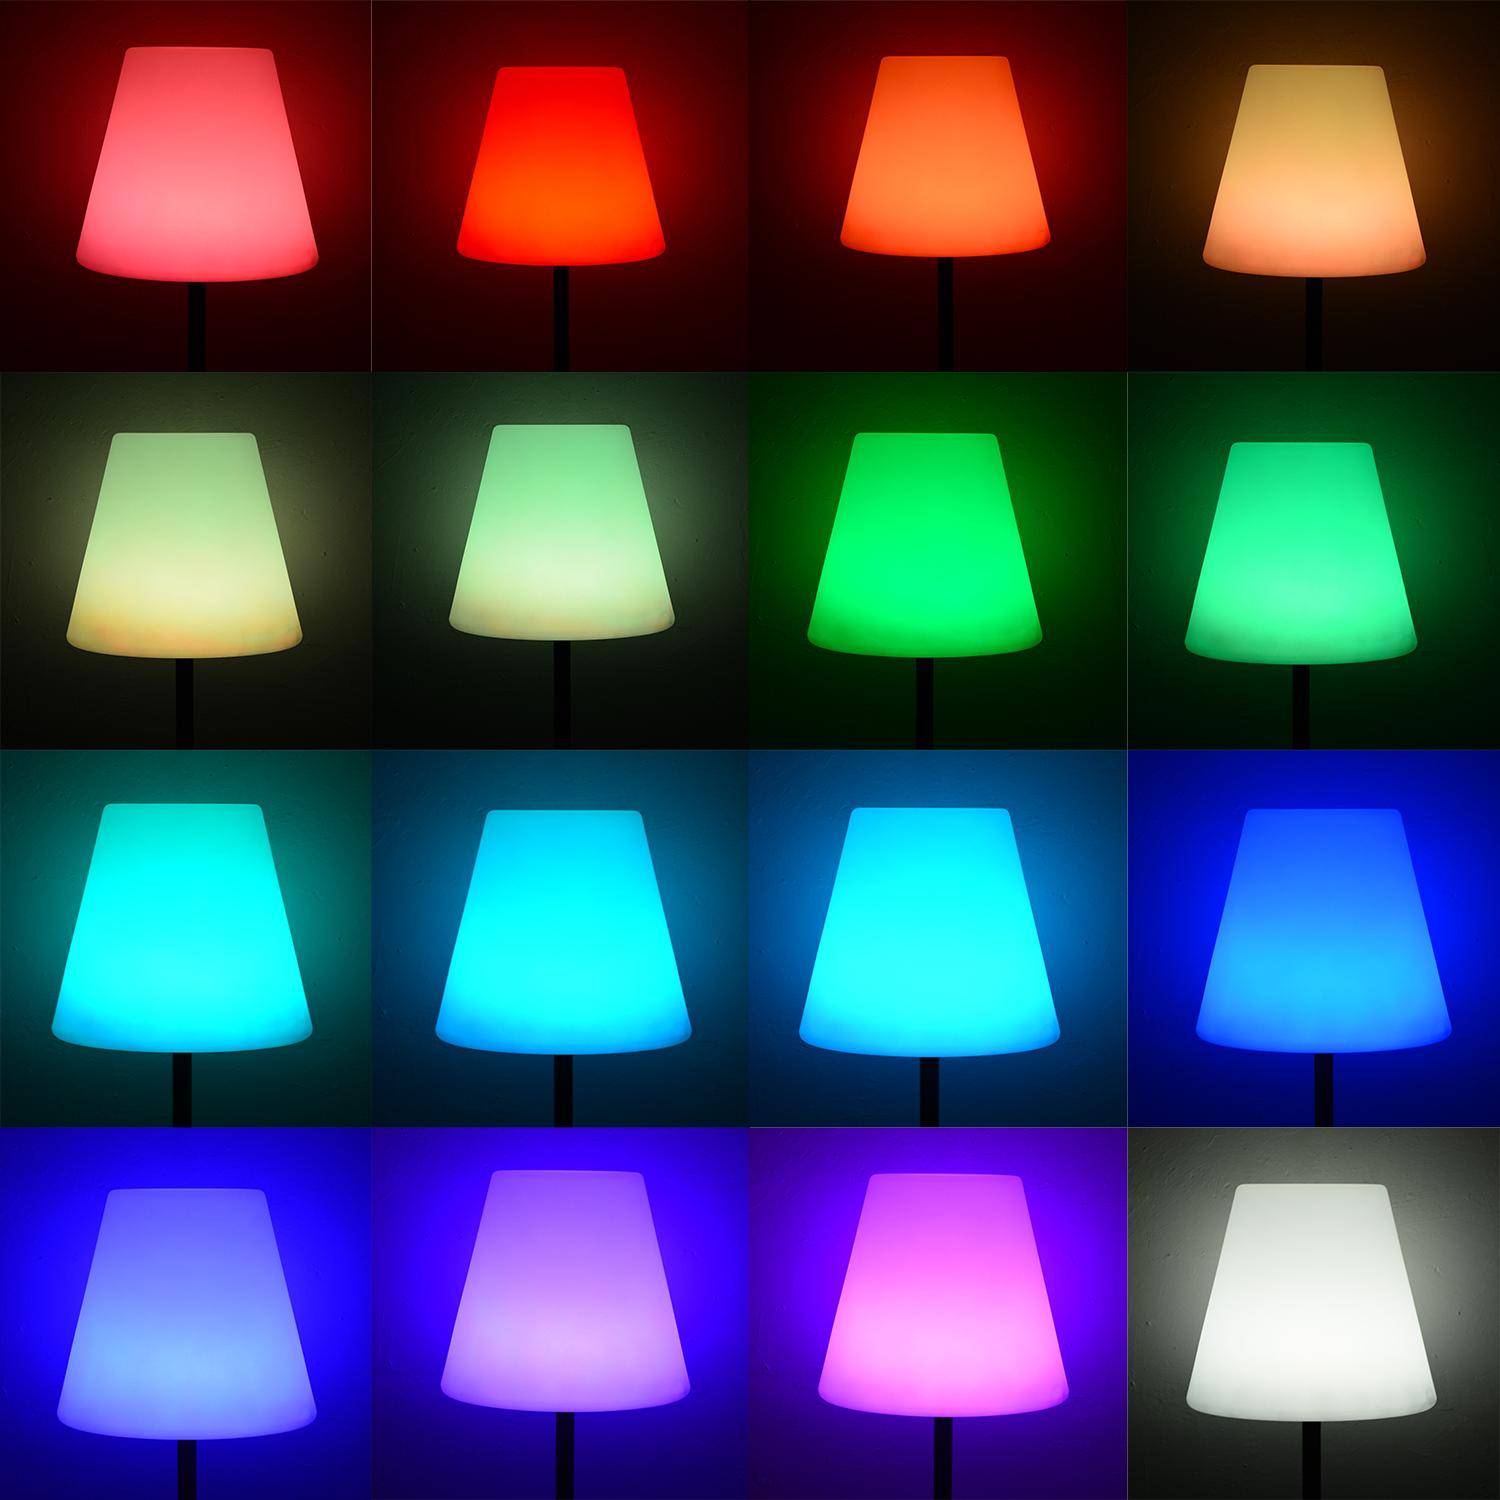 Staande lamp voor buiten 100 cm LAMPADA L LED hybride, multicolor staande lamp, design op batterij, zonne-energie, afstandsbediening Photo7